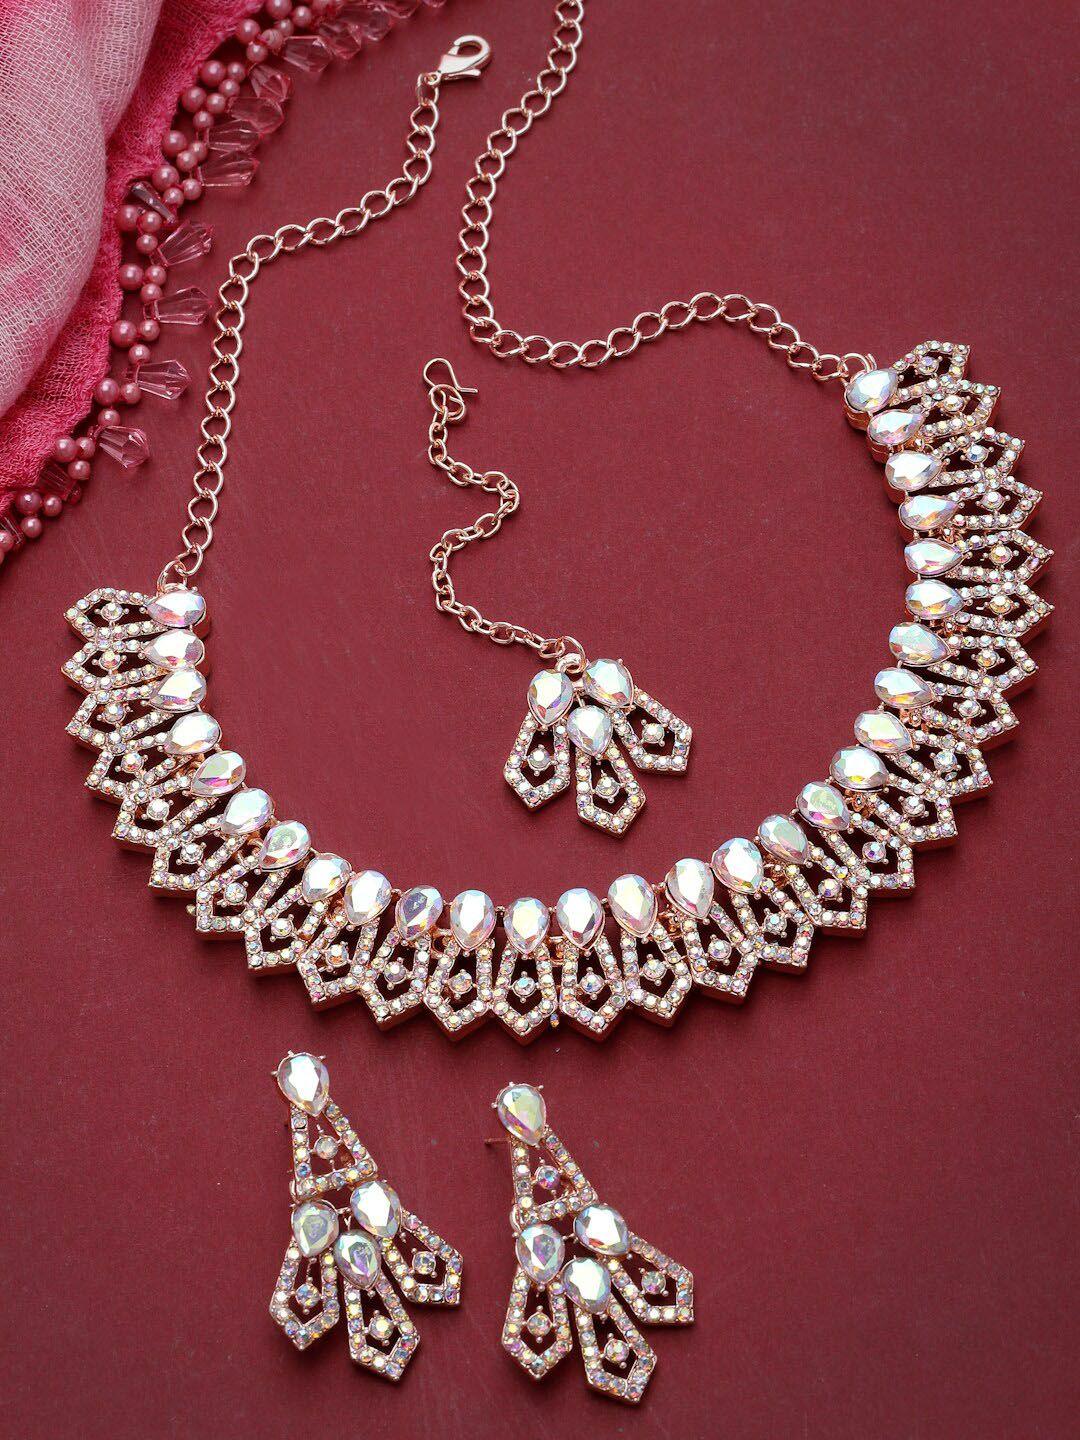 sukkhi rose-gold plated stones studded choker necklace jewellery set